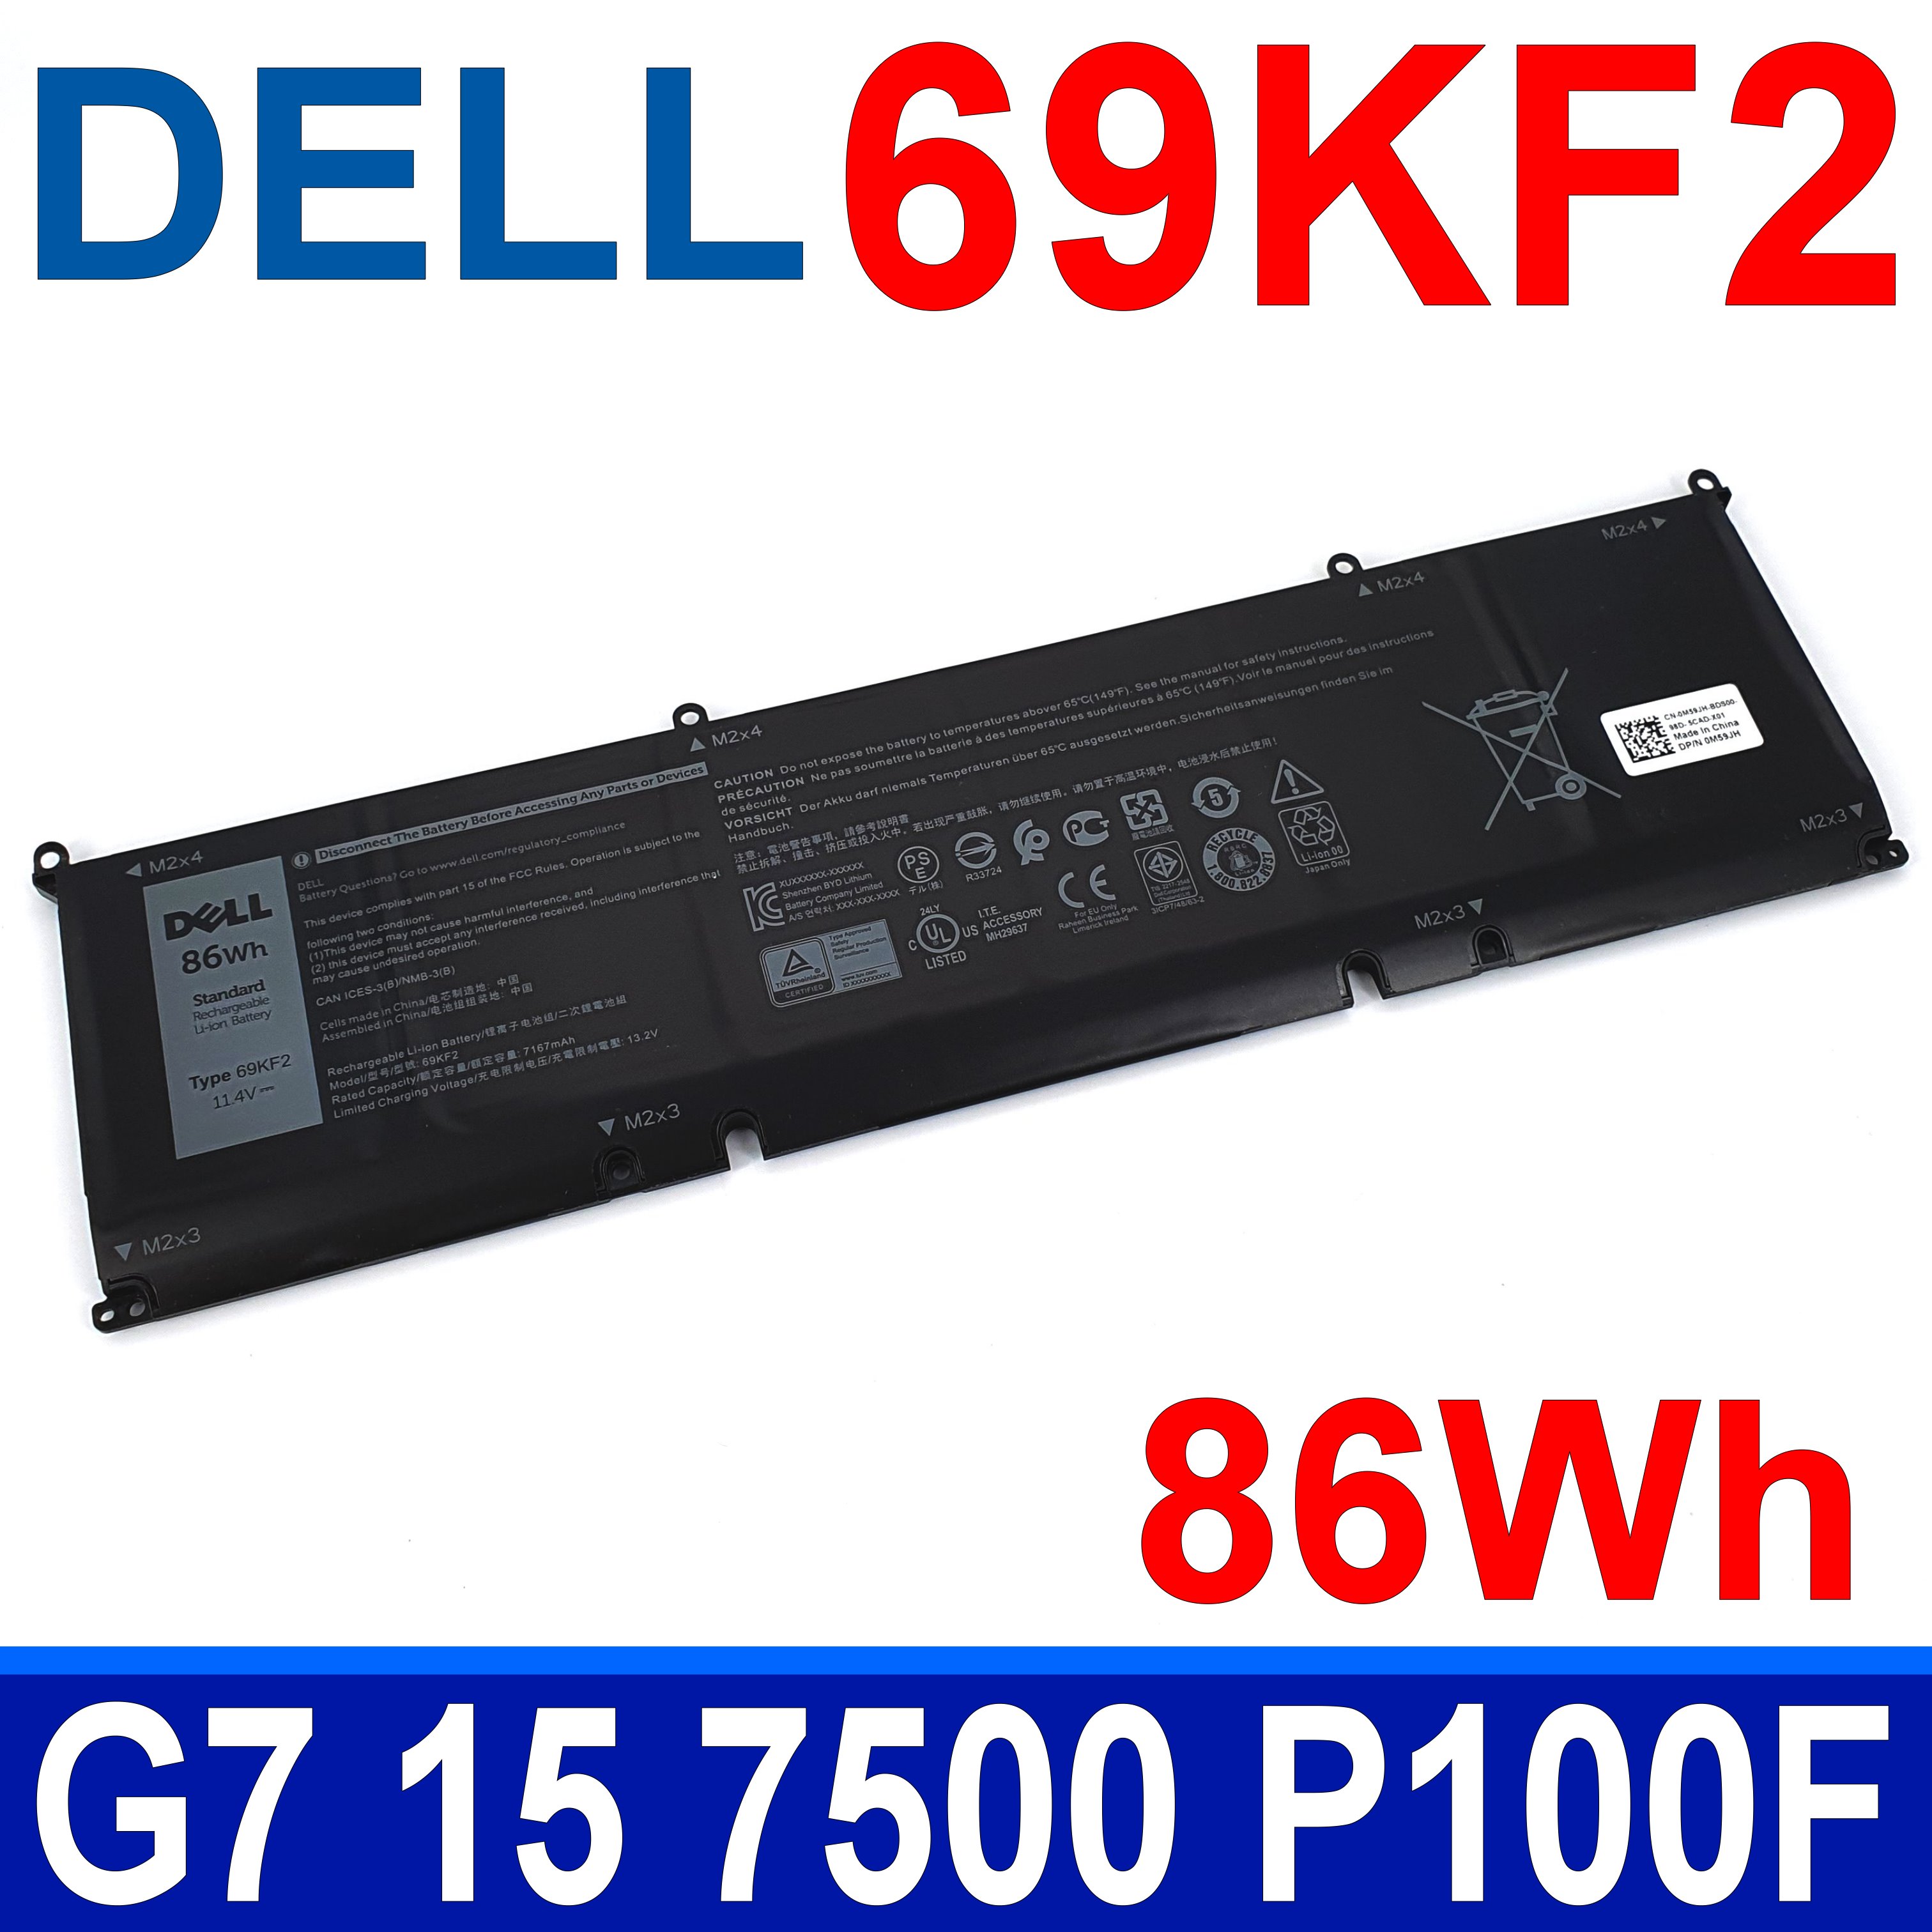 戴爾 DELL 69KF2 86Wh 6芯 原廠電池 70N2F M59JH 8FCTC(56Wh) DELL G7 15 7500 P100F XPS 15 9500 P91F